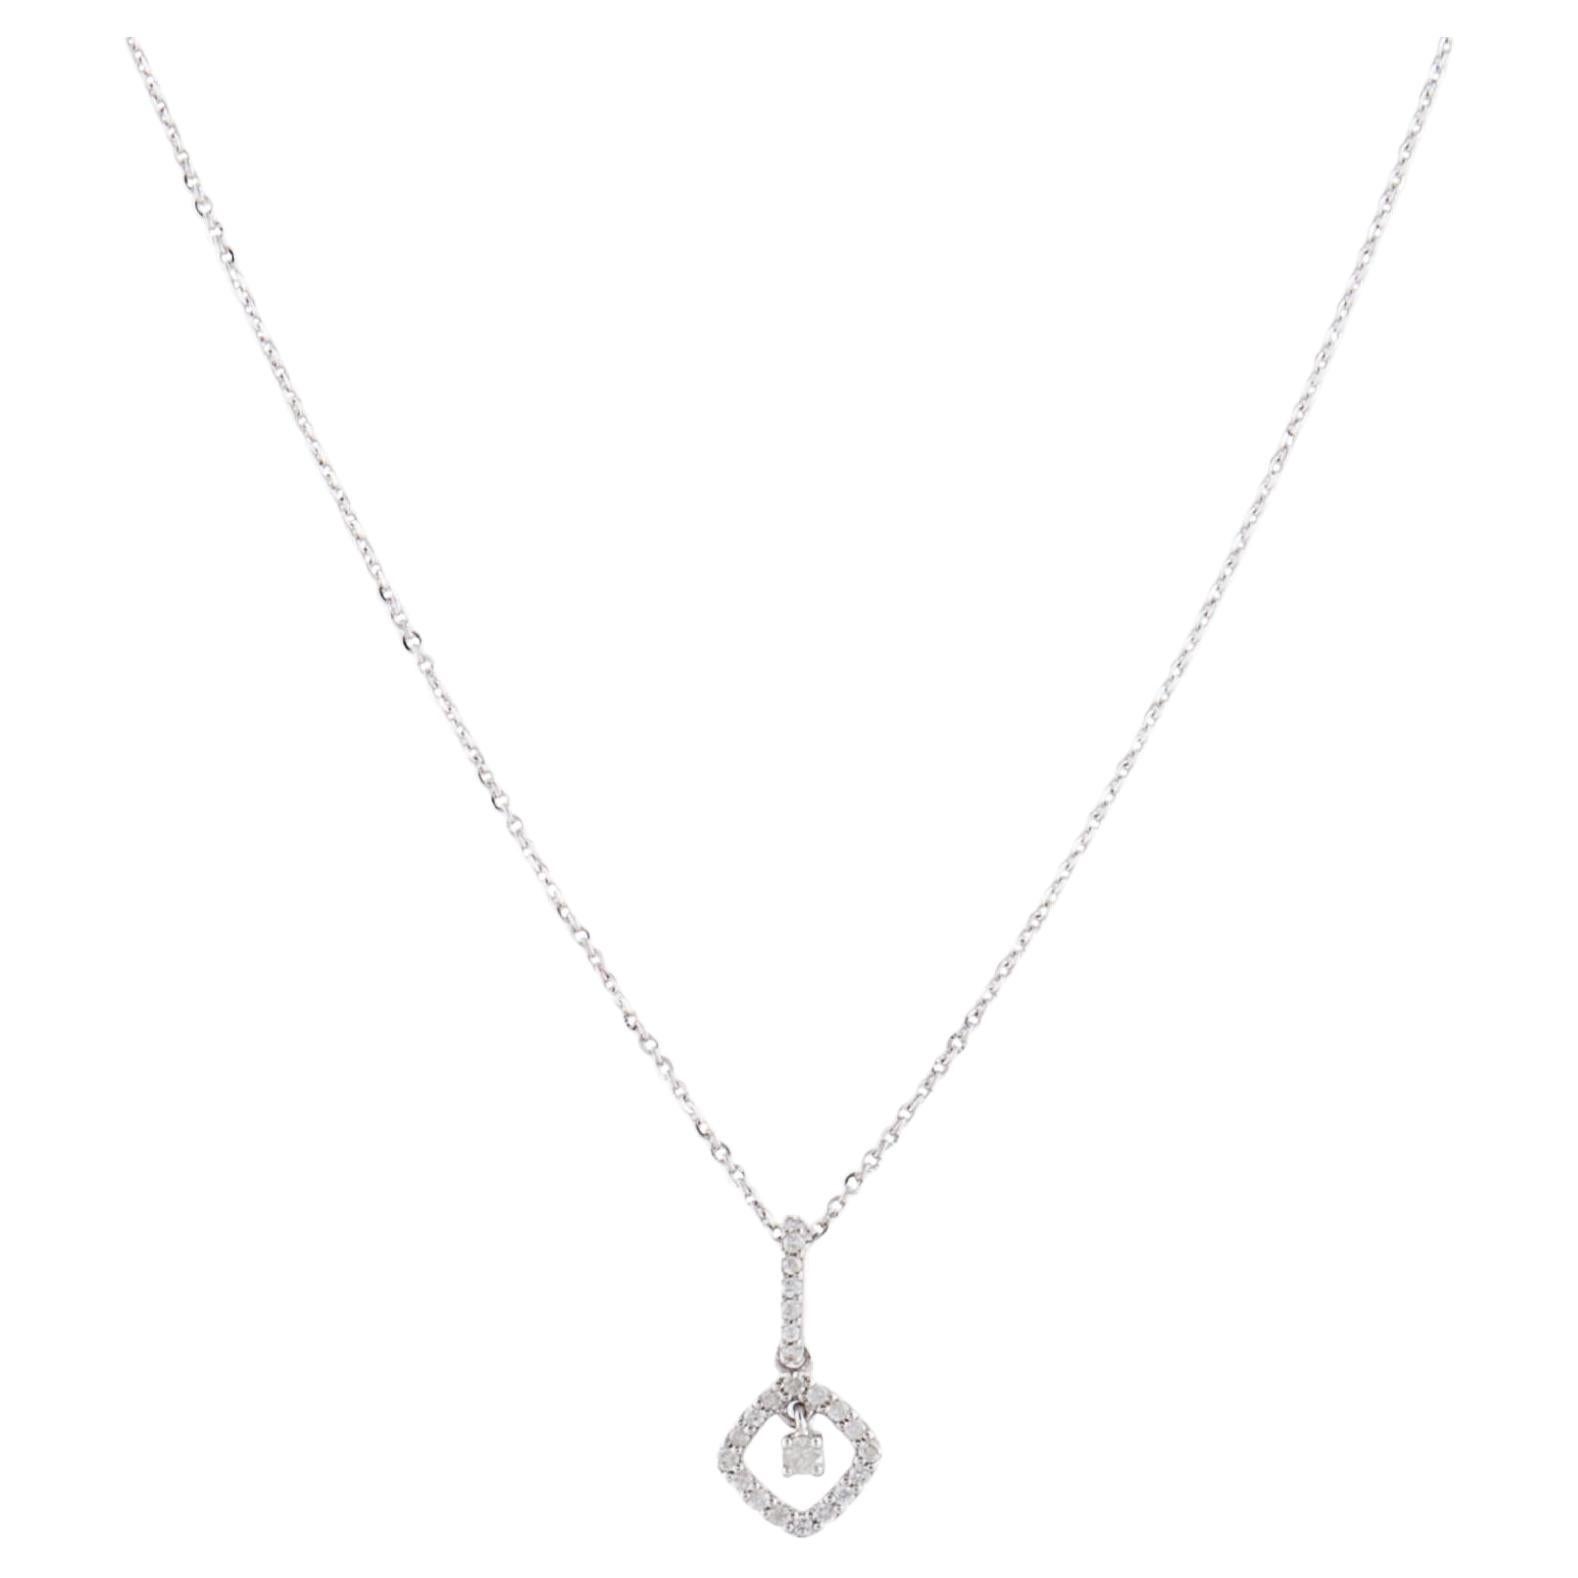 Luxury 14K Diamond Pendant Necklace - Elegant & Timeless Statement Piece For Sale